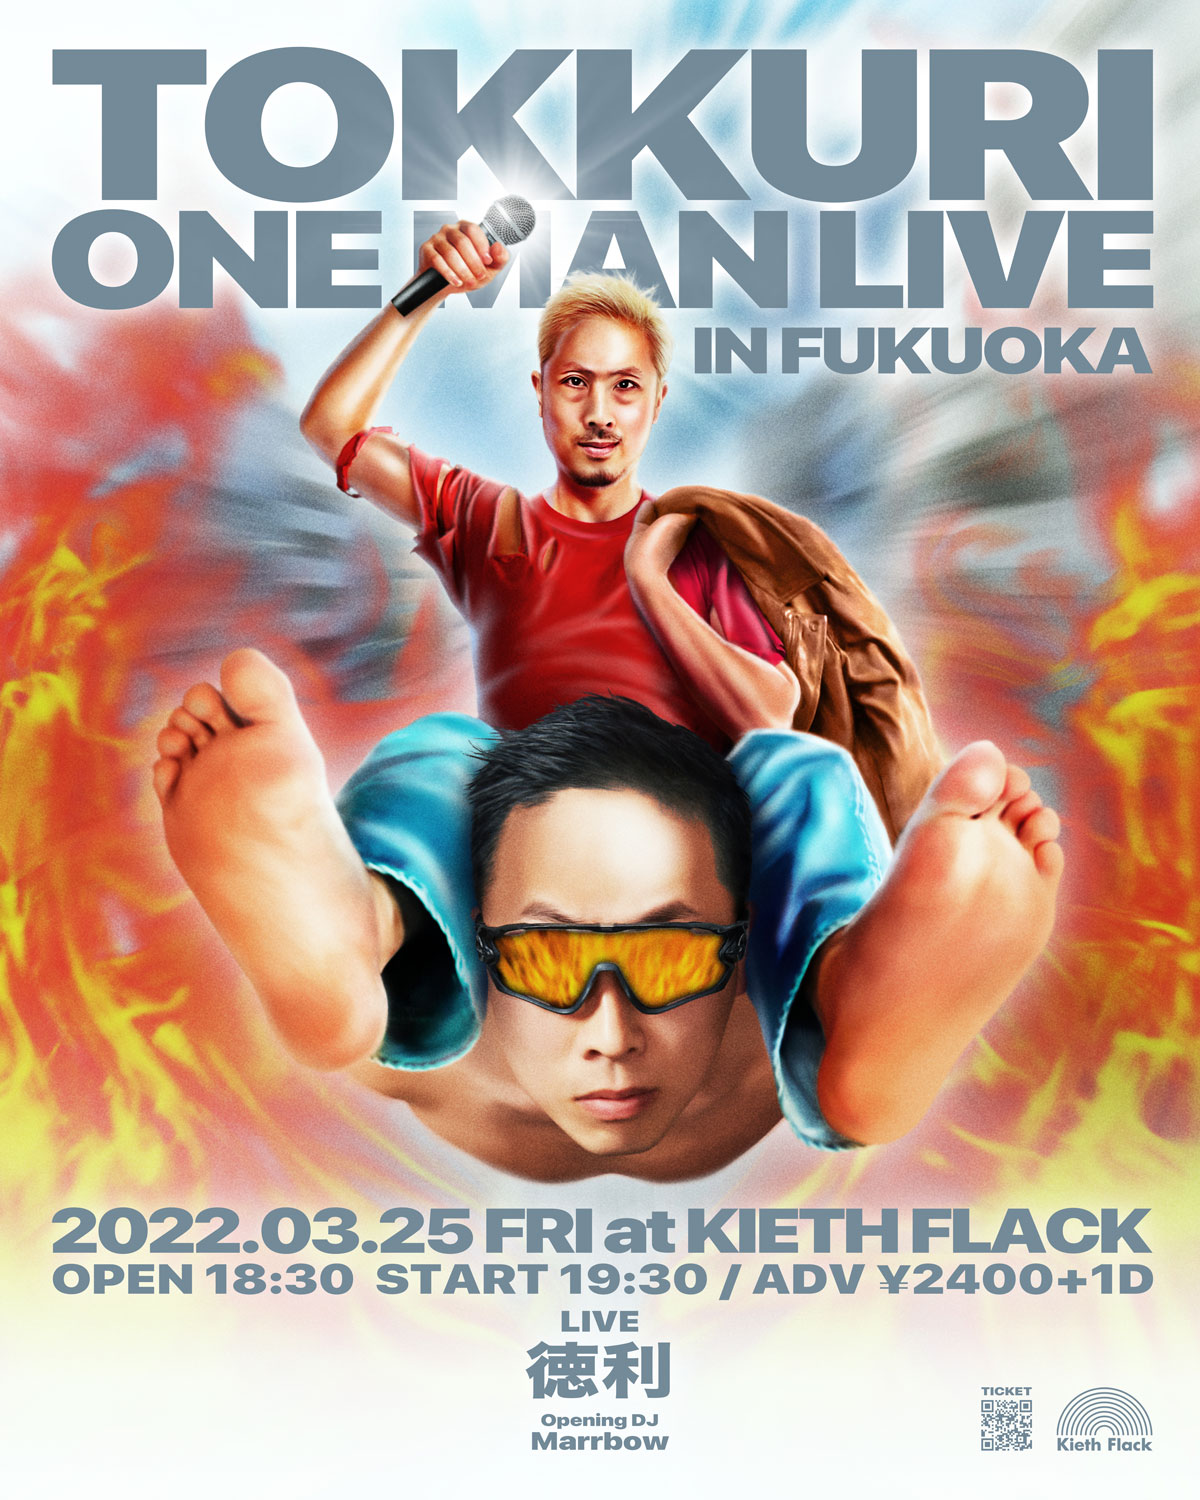 「TOKKURI ONE MAN LIVE in FUKUOKA」